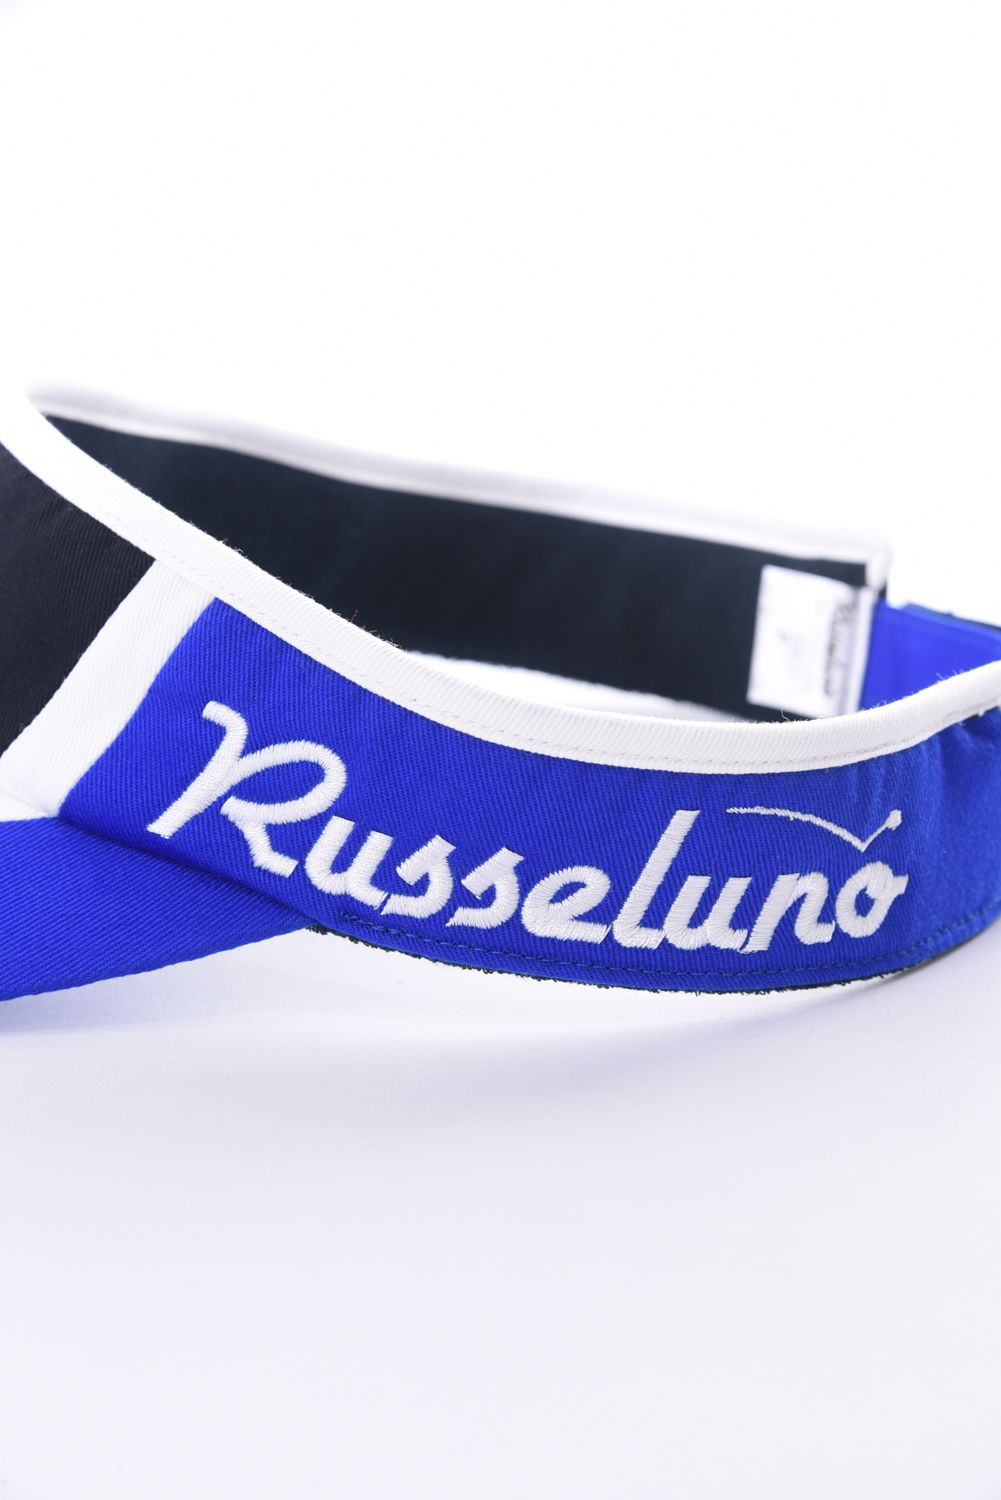 RUSSELUNO - CUTTING VISOR / ロゴ刺繍 サンバイザー ブラック | GOSSIP GOLF